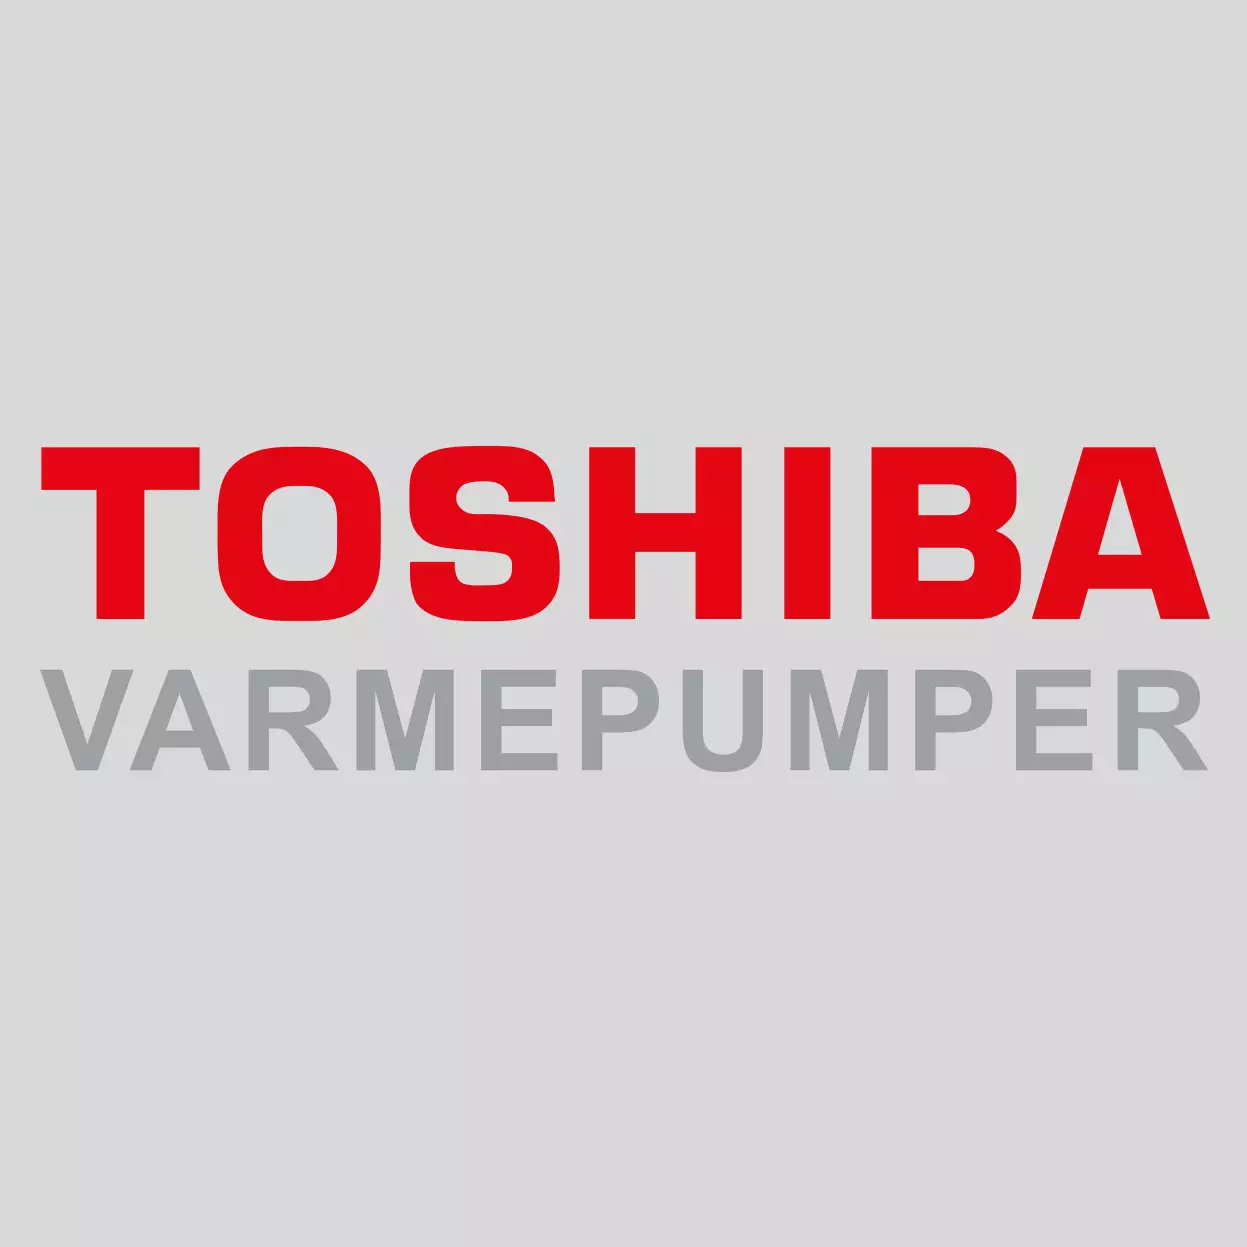 Toshiba_Varmepumperlogo, last ned.jpg